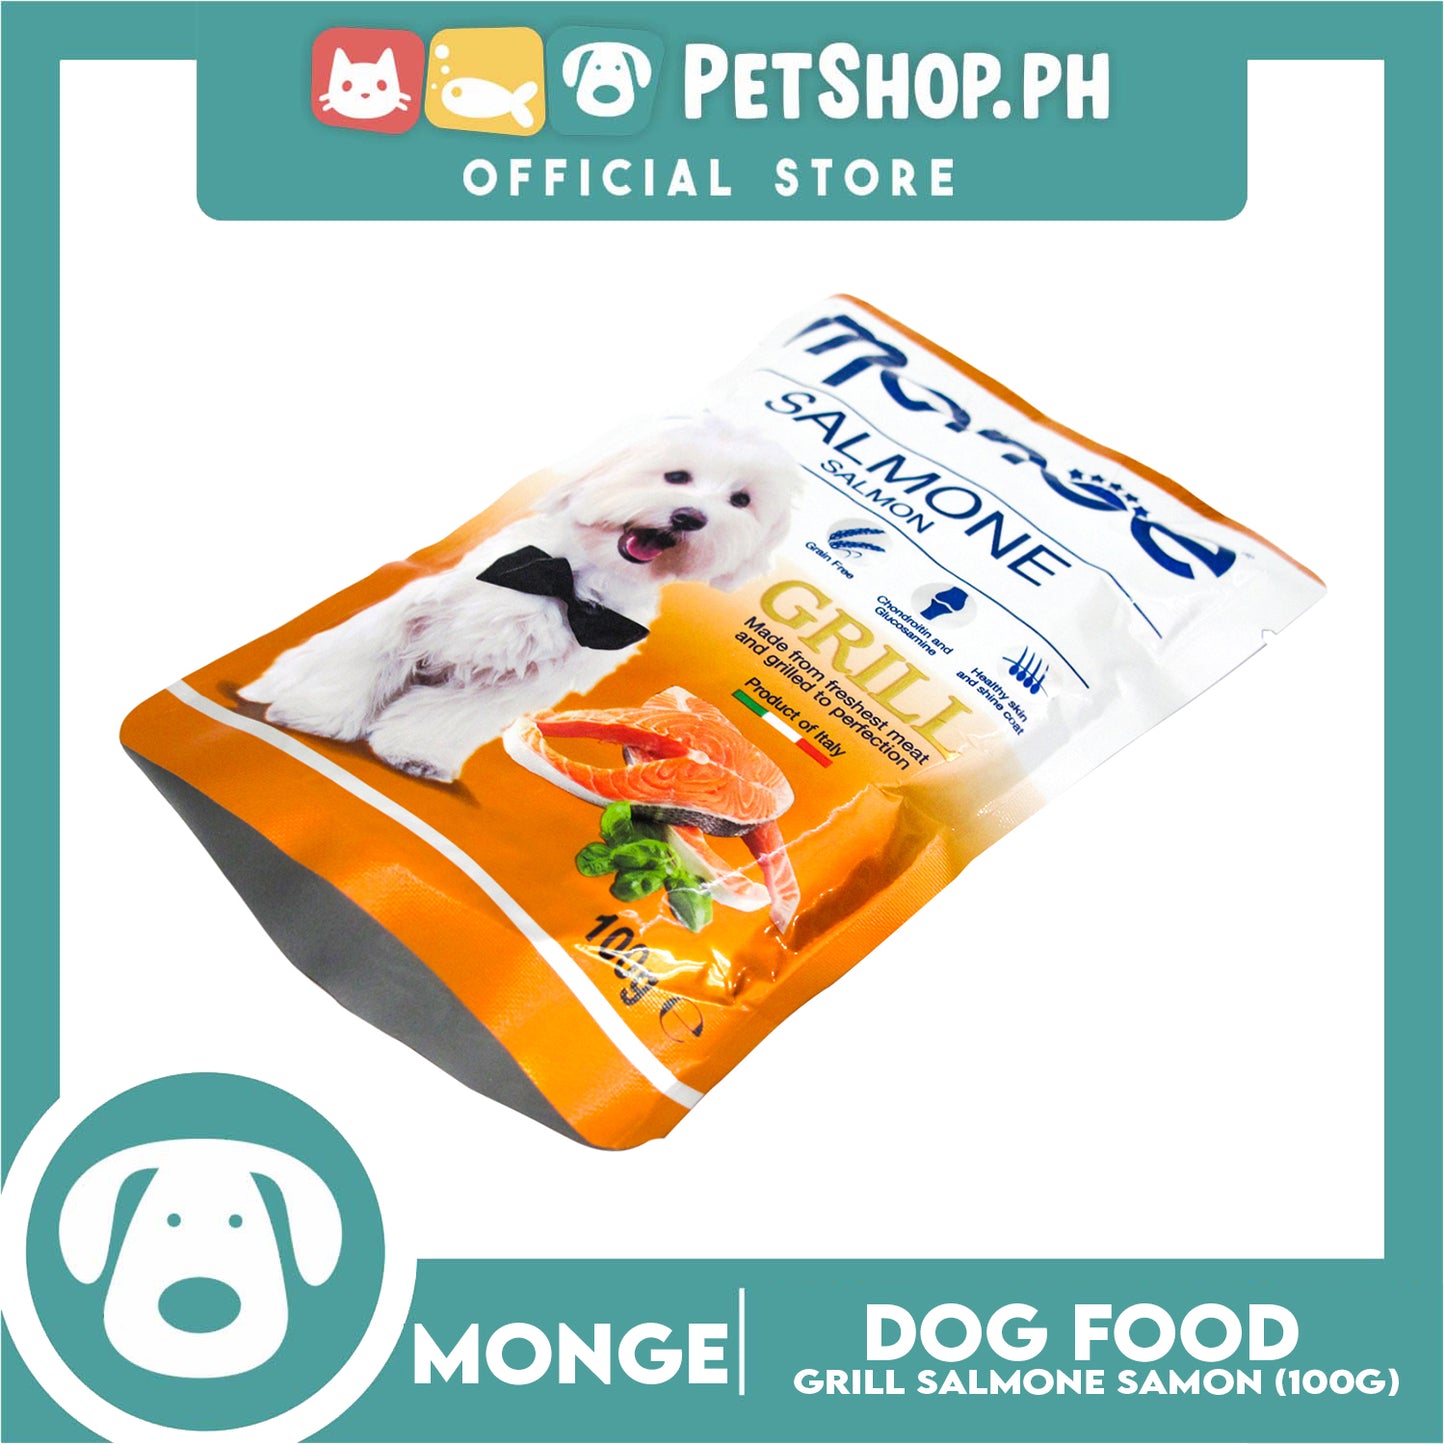 Monge Pouch Grill Chunkies Dog Food 100g (Salmon) Grain Free And Helps Dog Shiny Hair